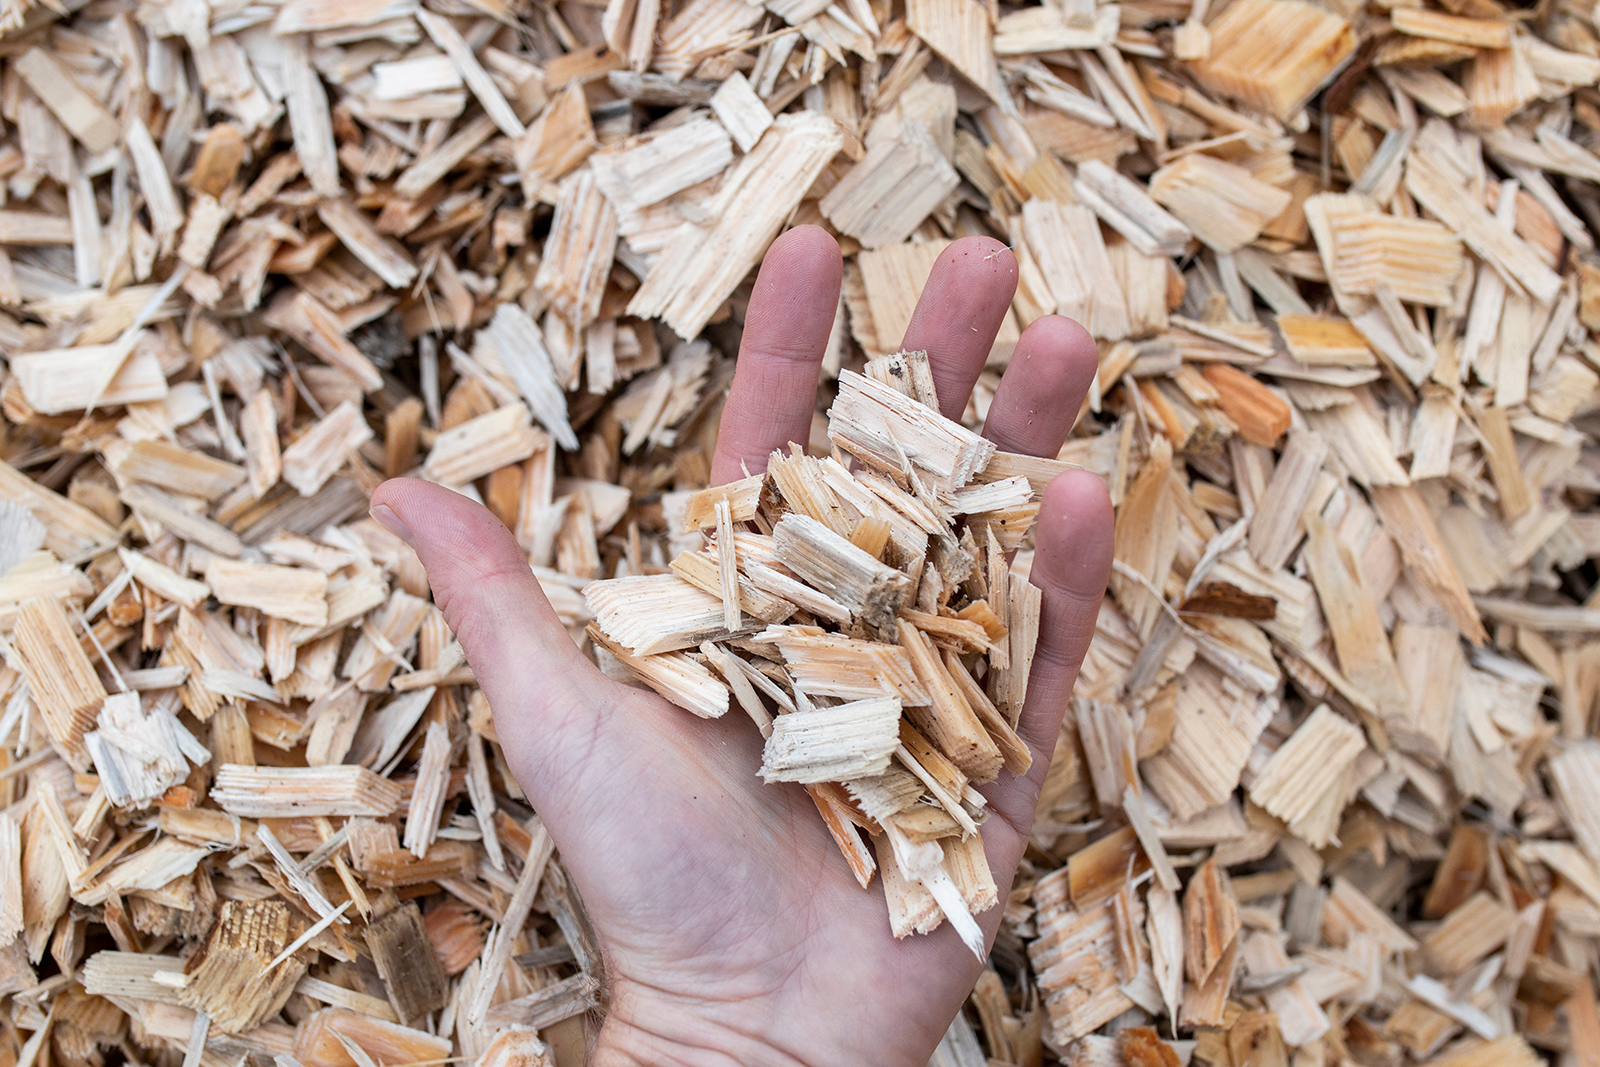 Wood chips. Photo: Shutterstock